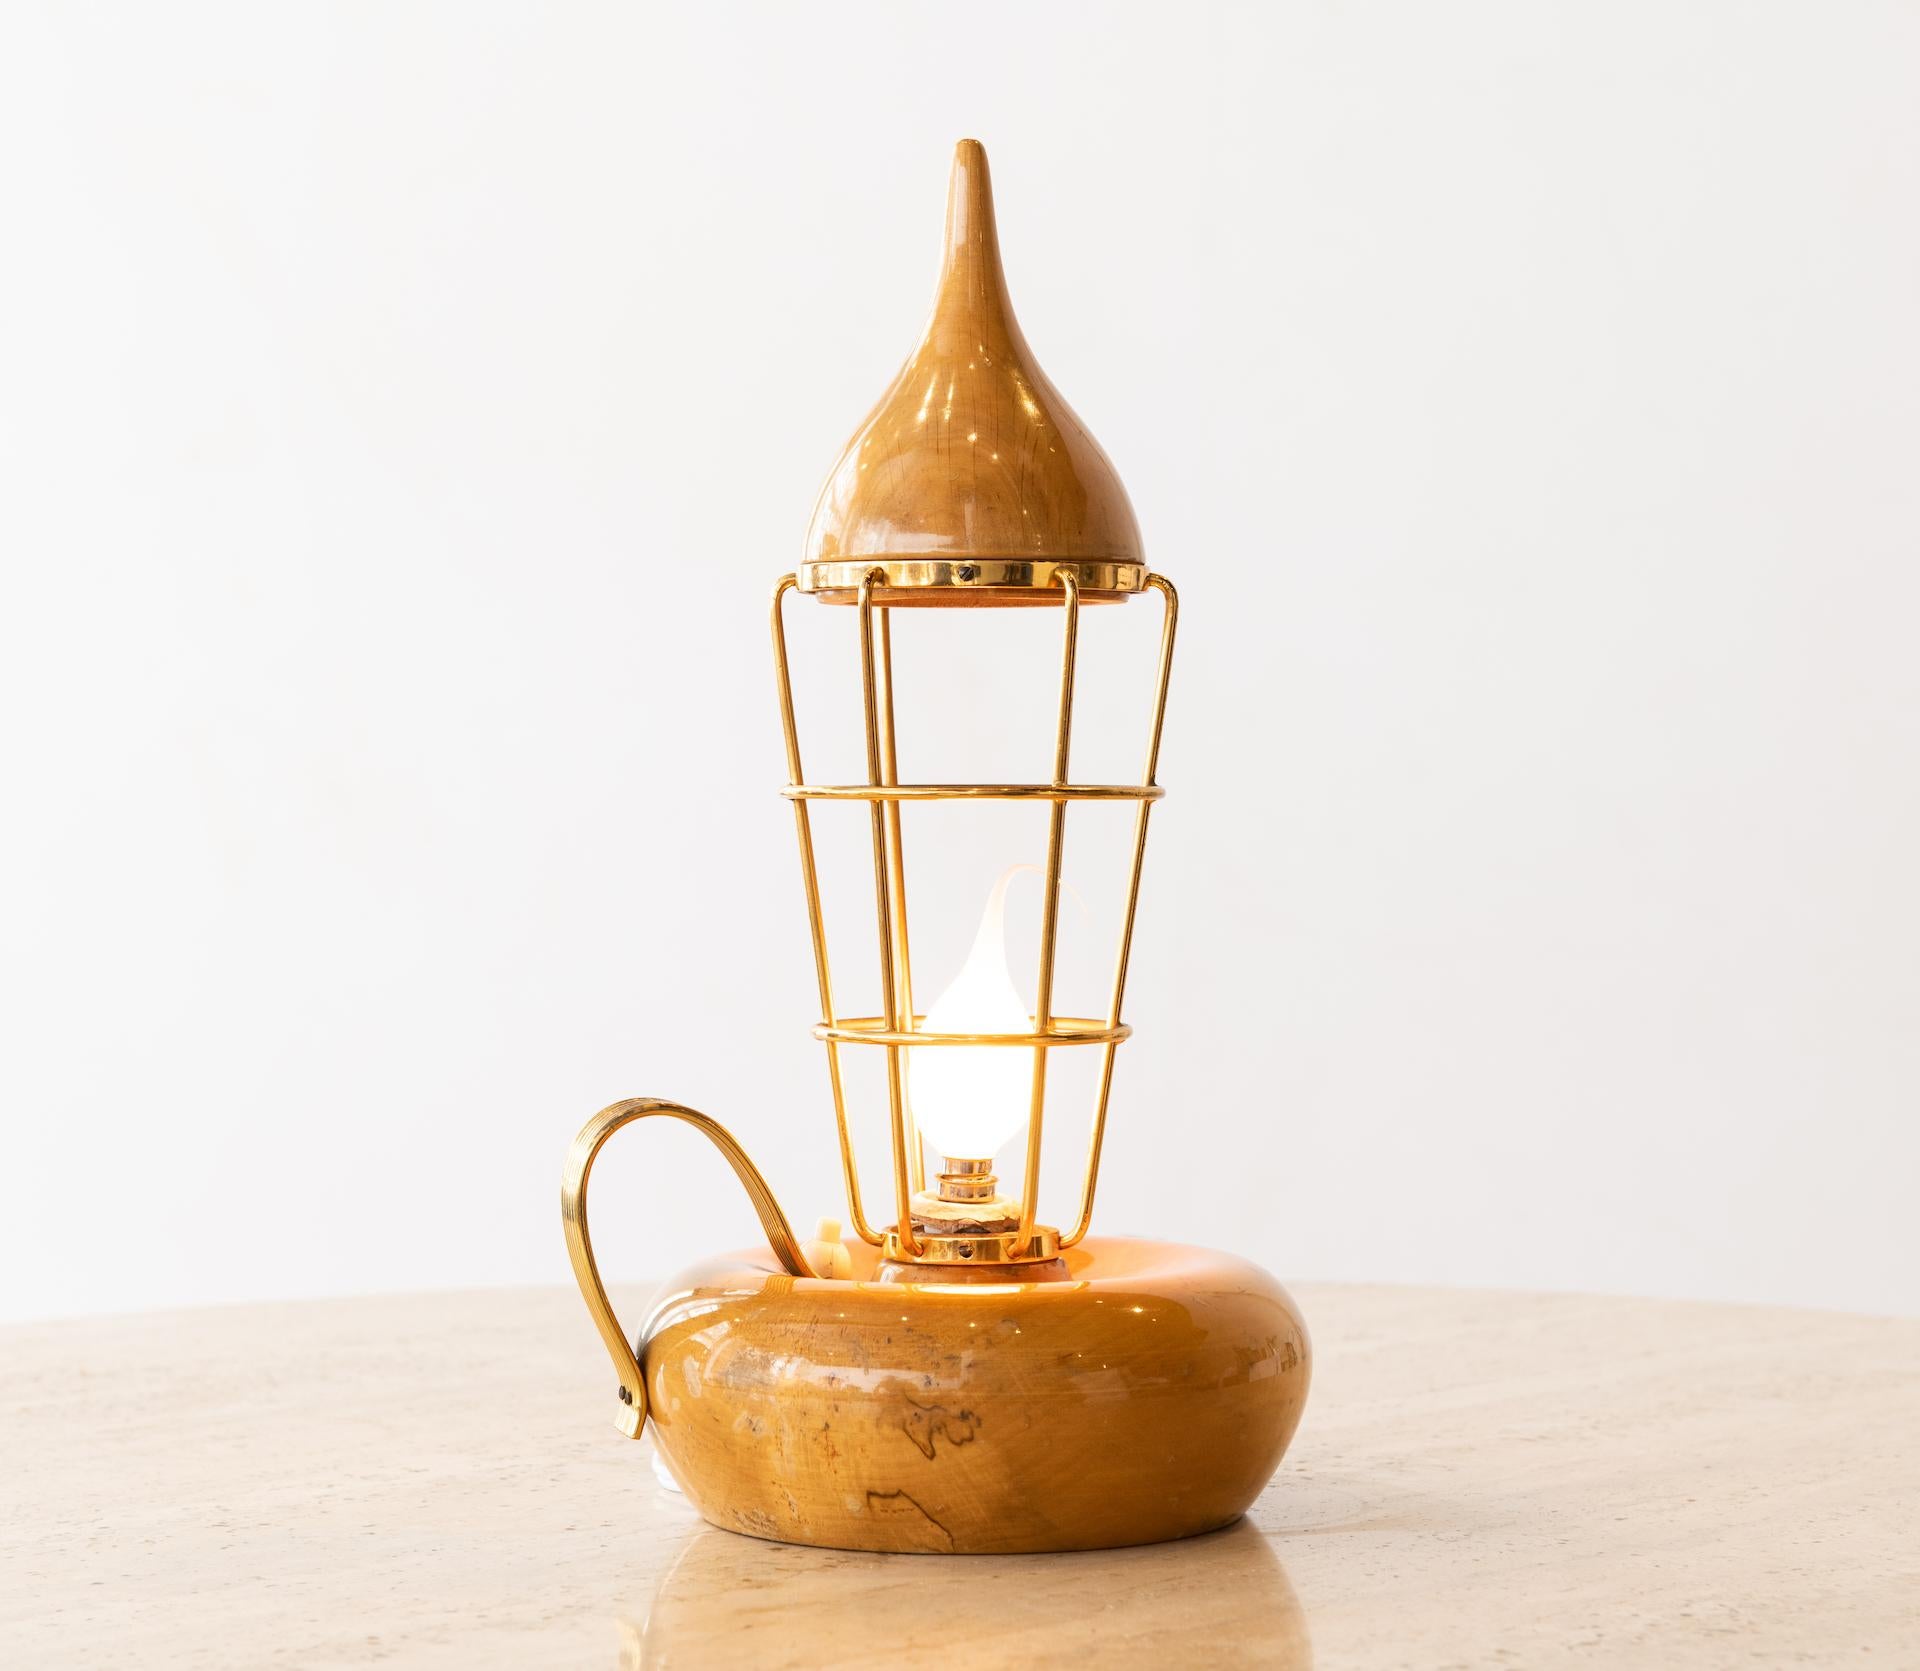 Turned Italian Midcentury Table Lamp by Aldo Tura for Aldo Tura Milano, circa 1950s For Sale